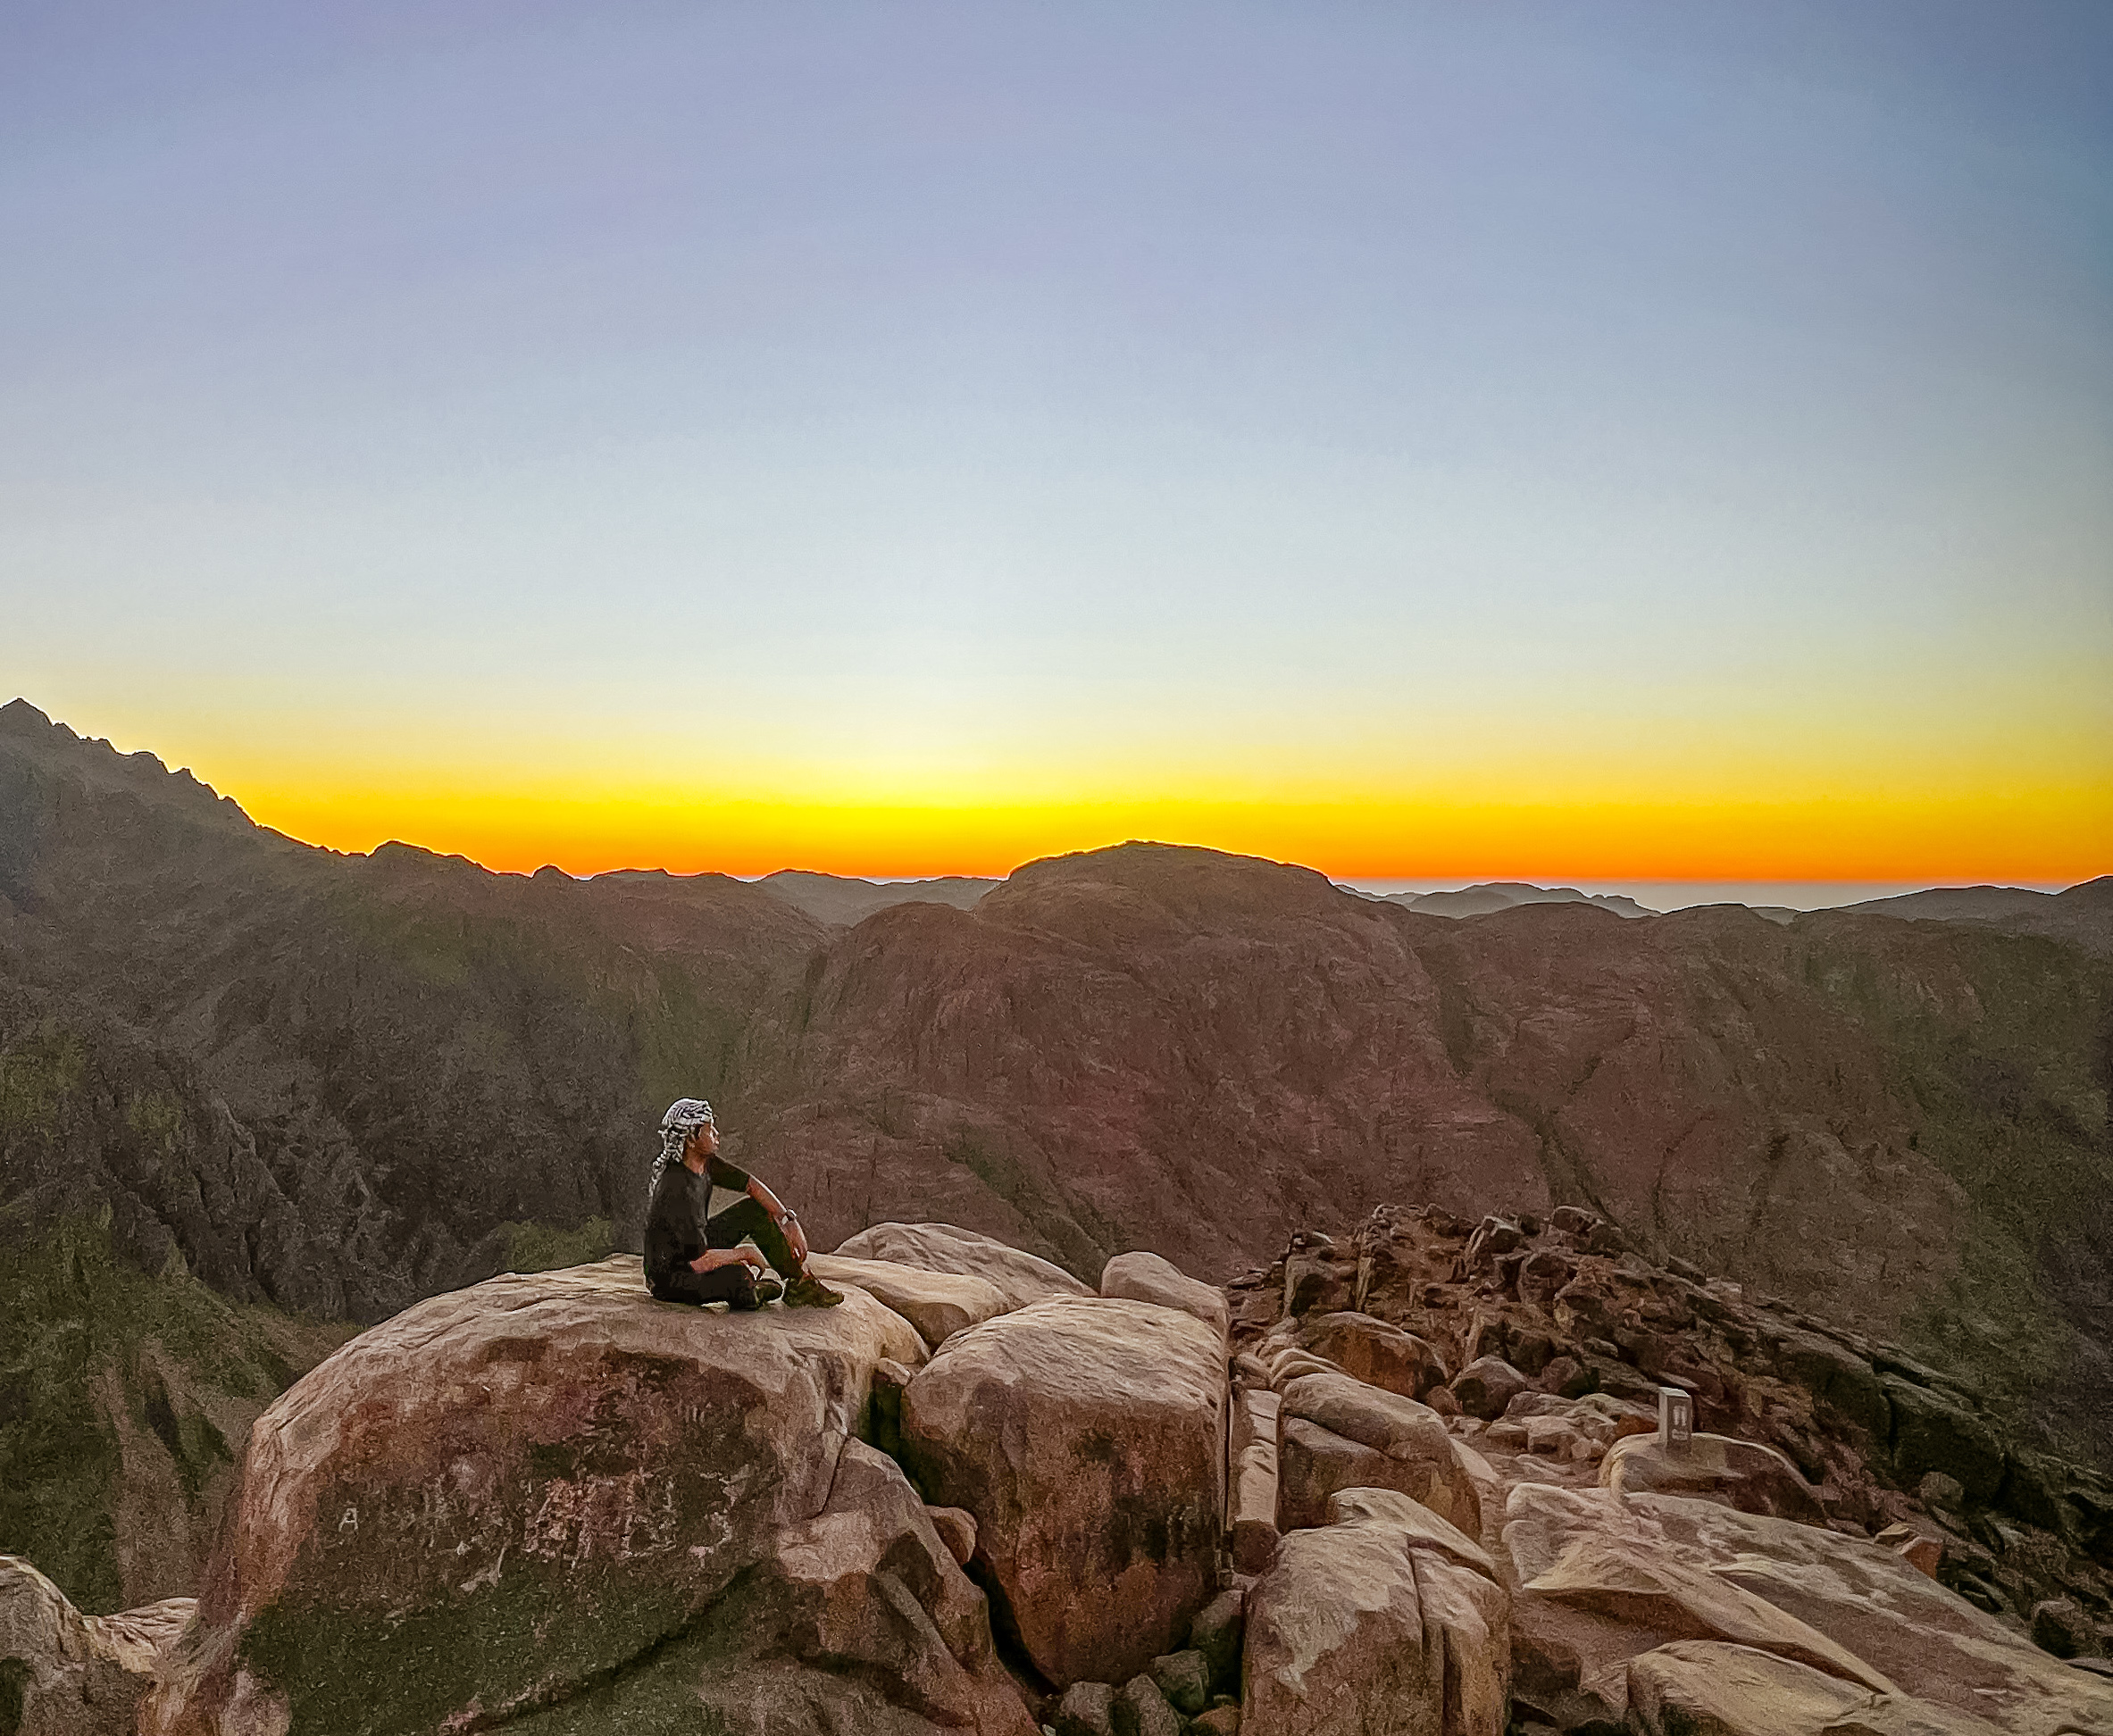 Mt. Sinai, Egypt, 2021.